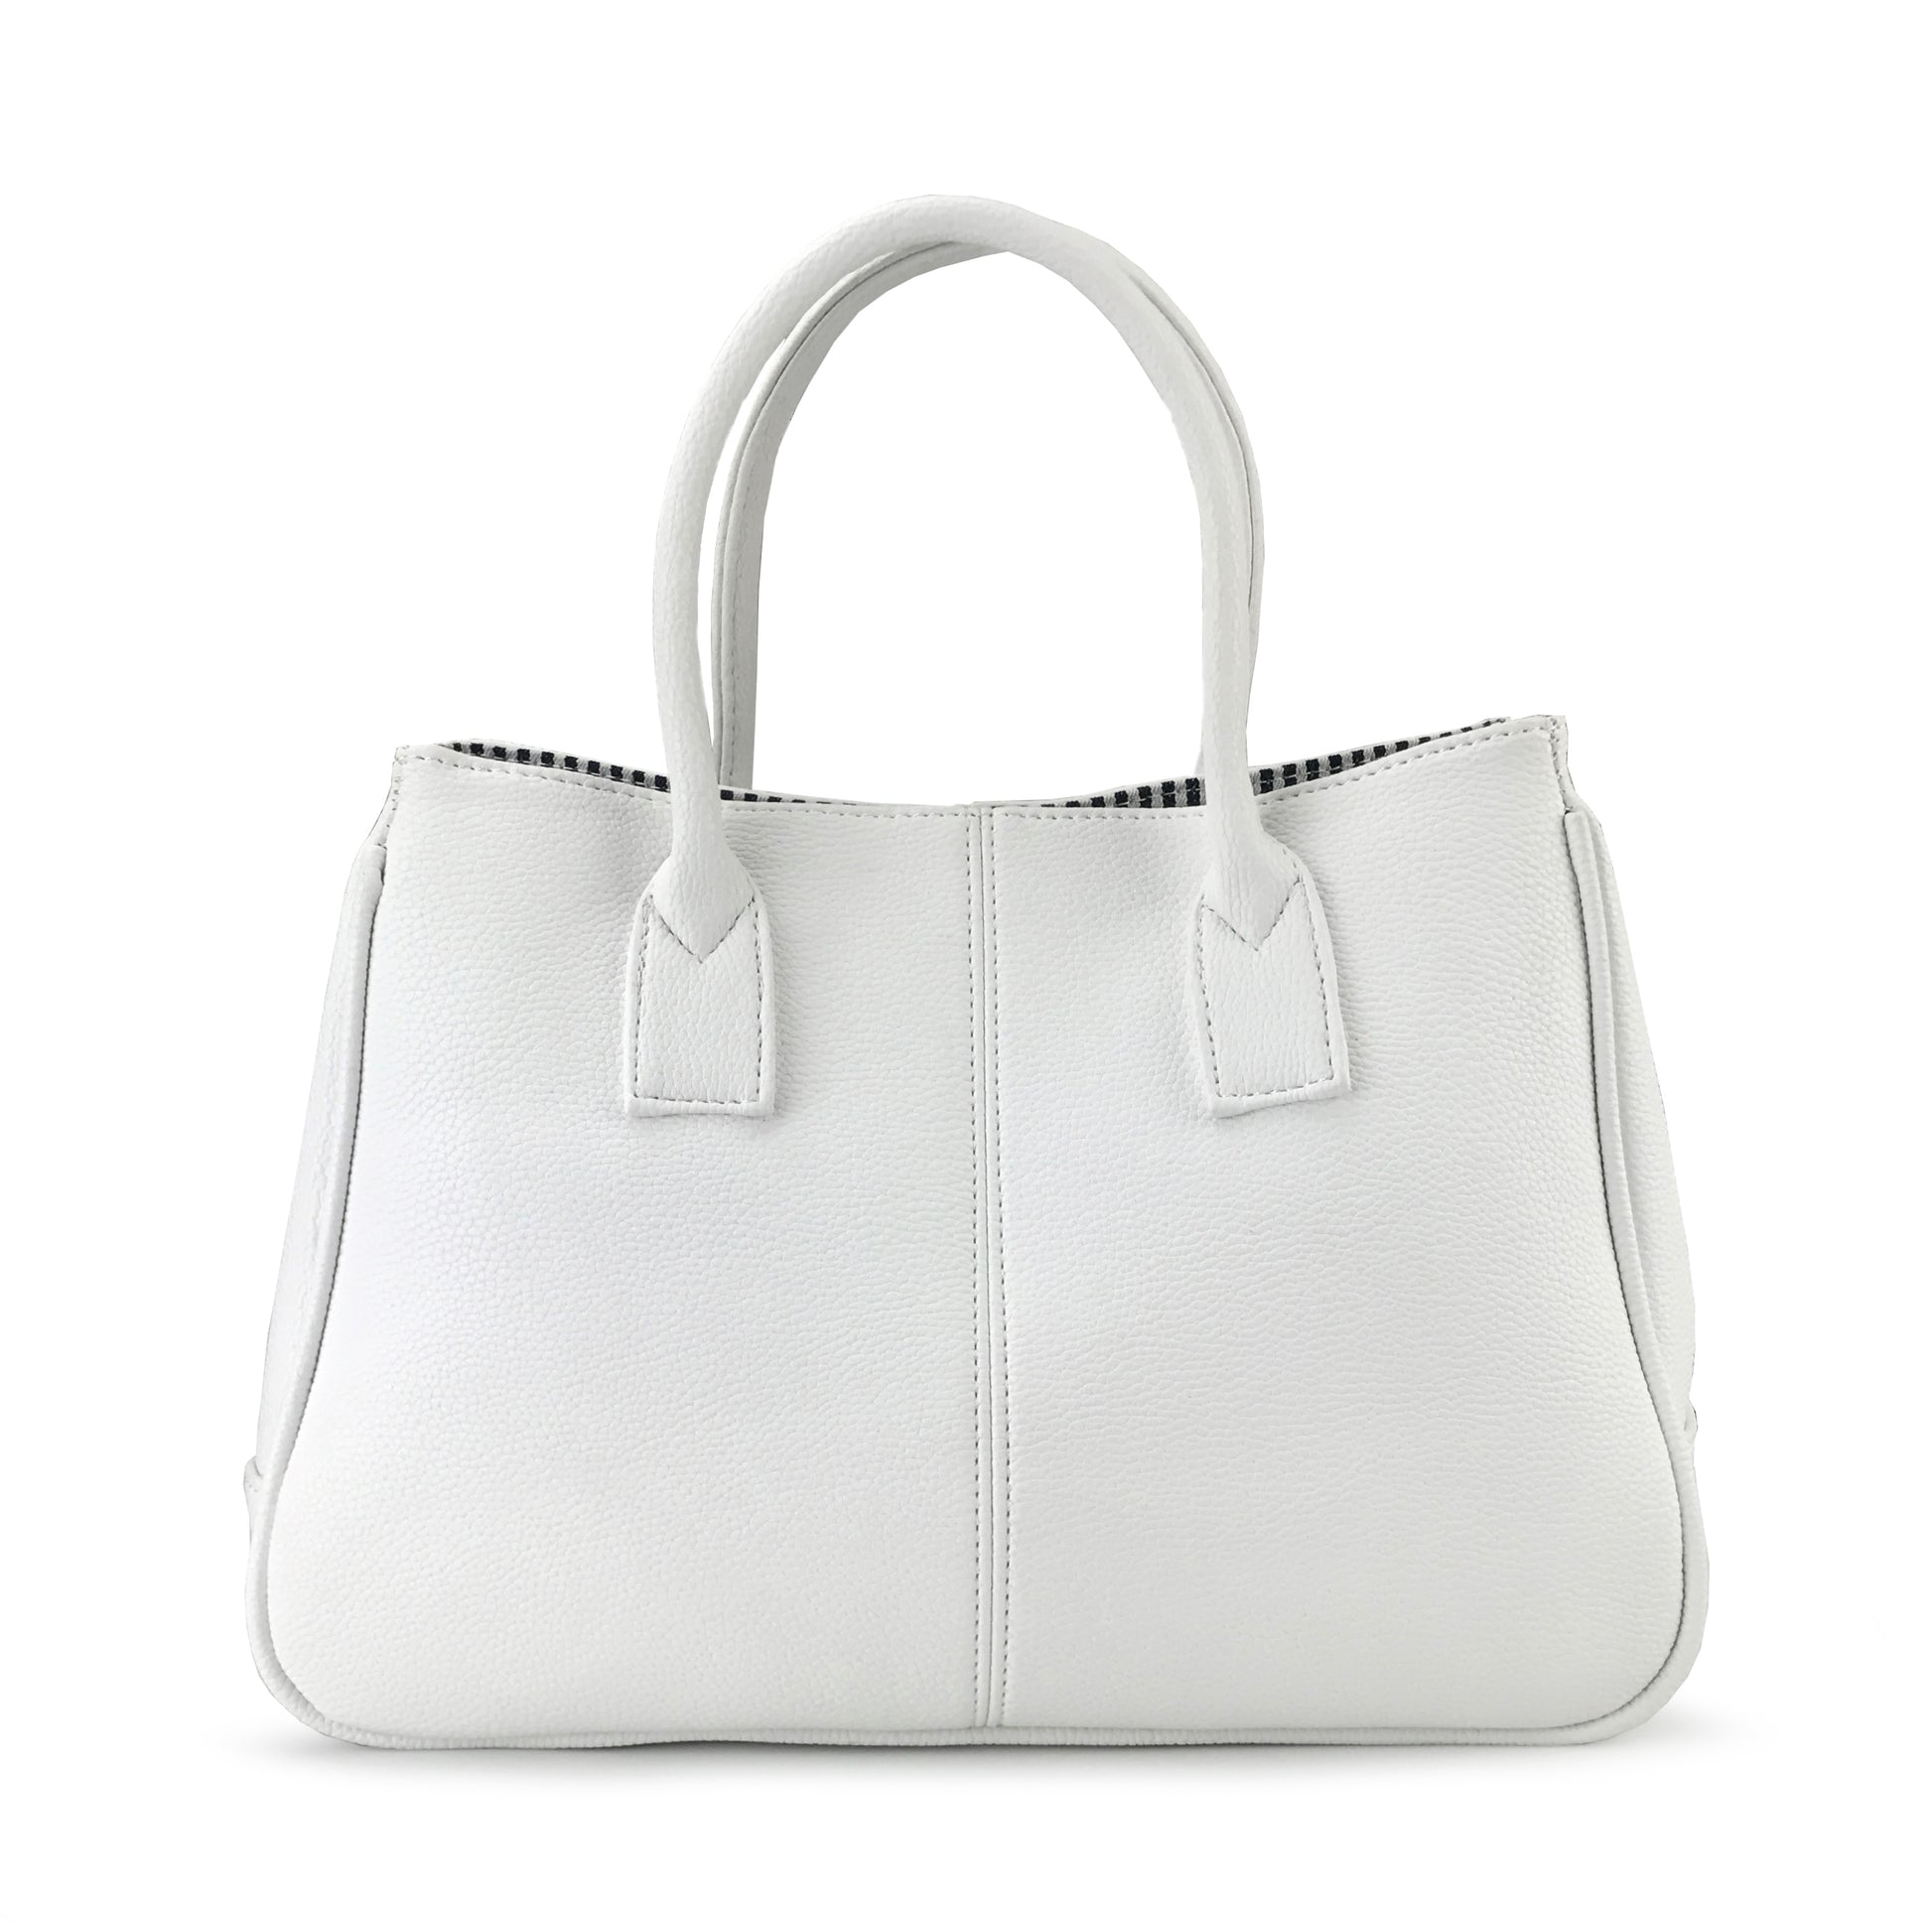 Women's Faux Leather White Handbags, Bags